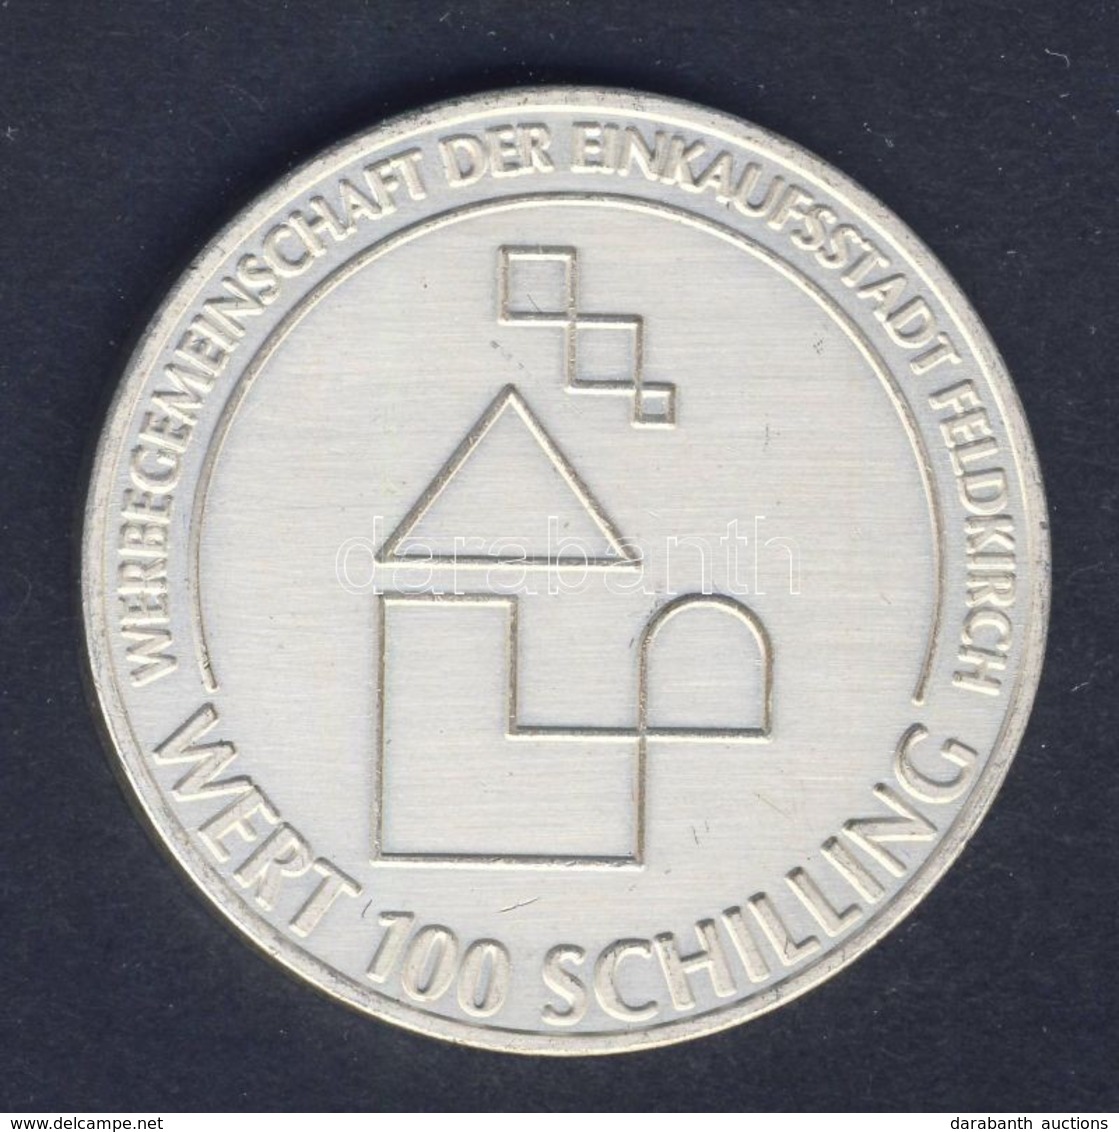 Ausztria/Feldkirch 1996. 100Sch '10 Eves Az Artista Fesztival' Zsetonja T:2
Austria/Feldkirch 1996. 100 Schilling 'Jubil - Unclassified